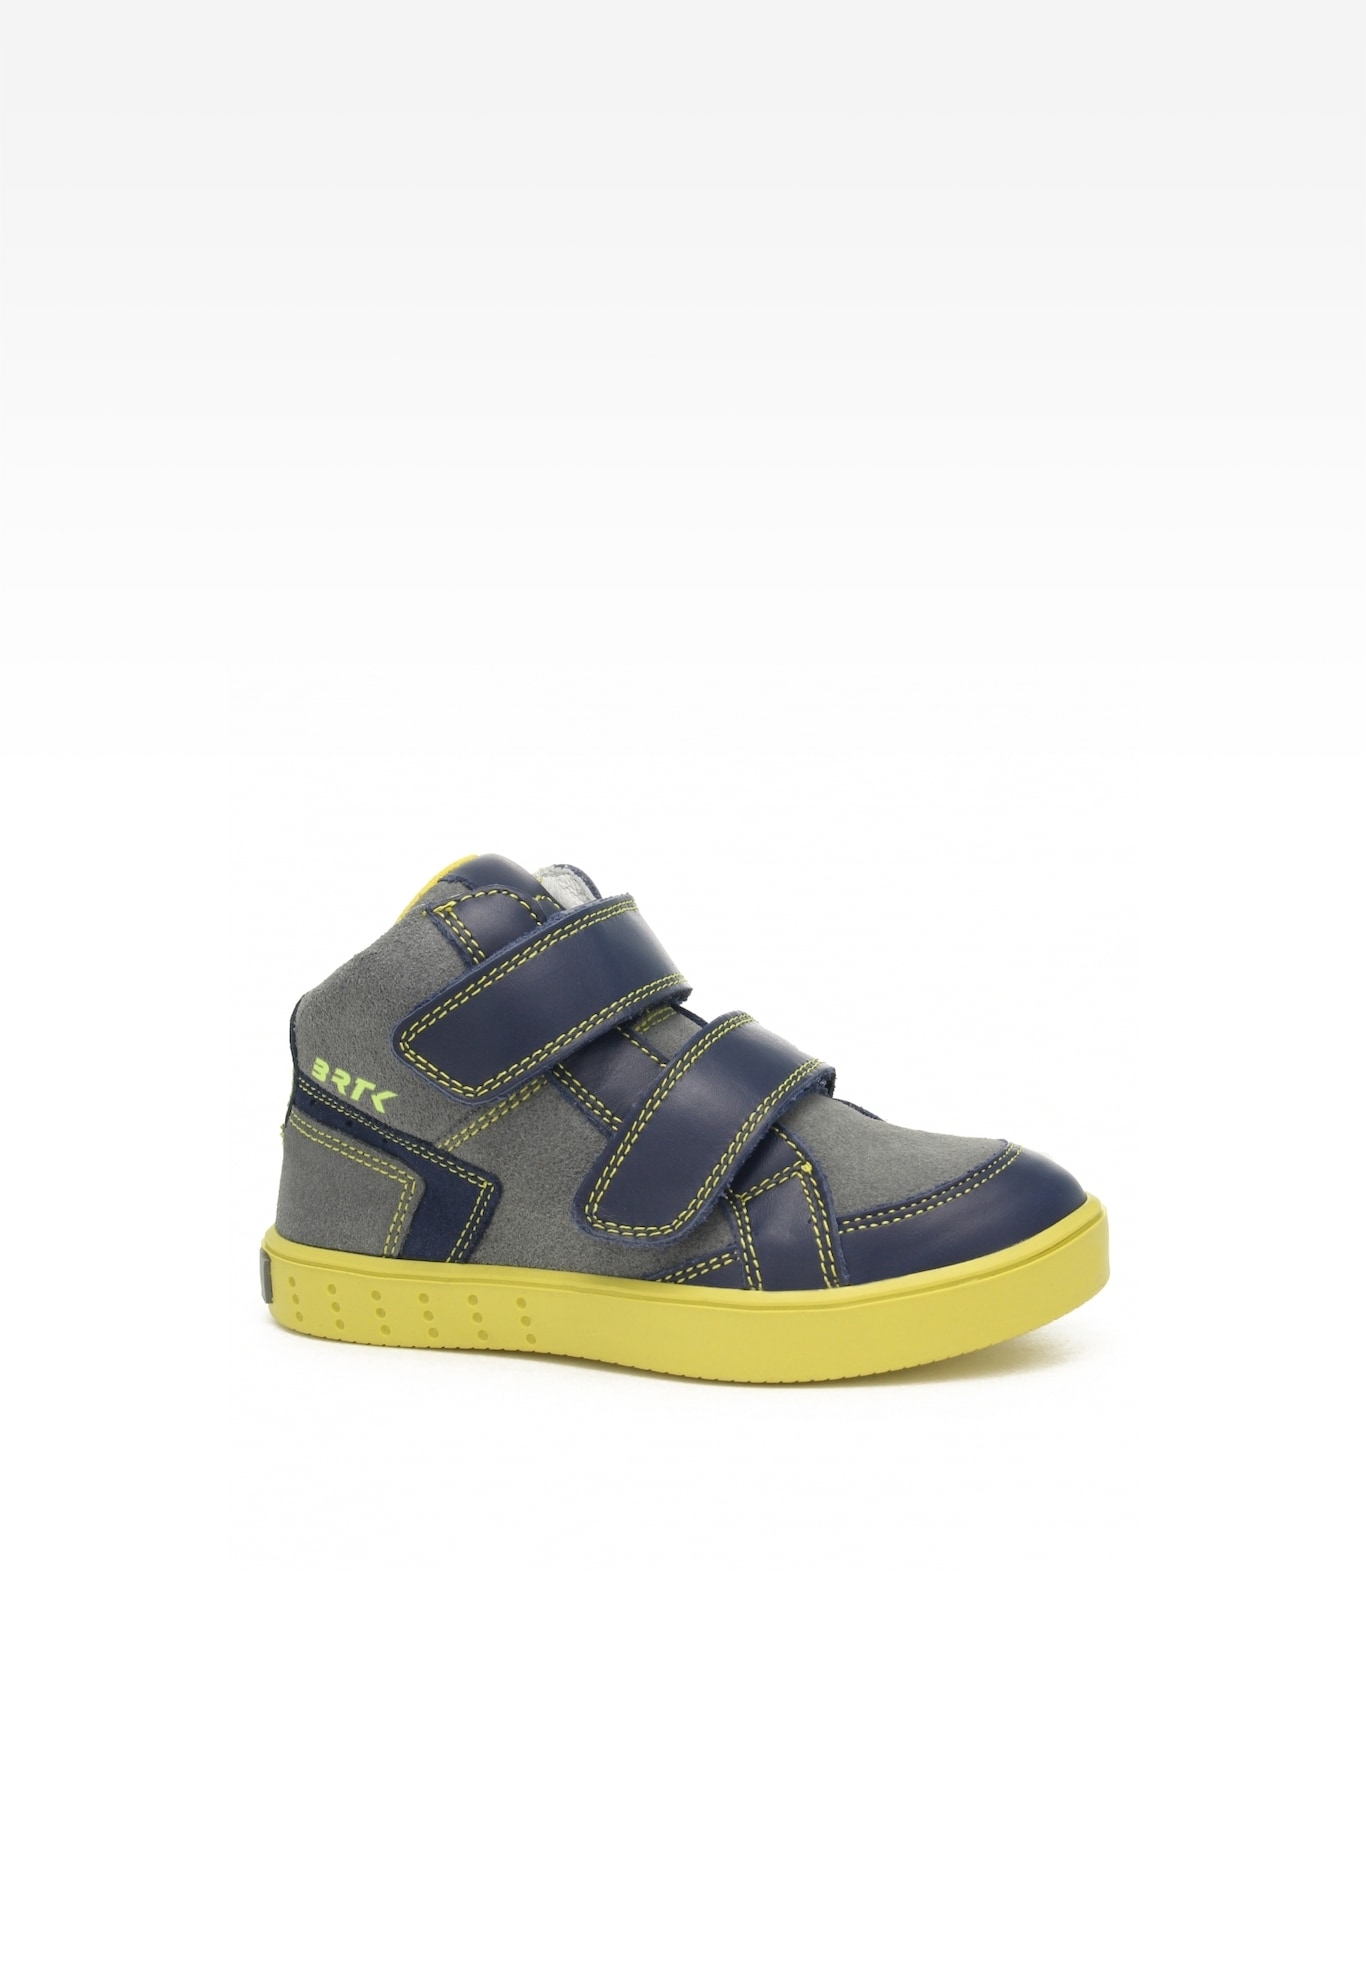 Sneakers BARTEK 24414-002, szaro-żółty